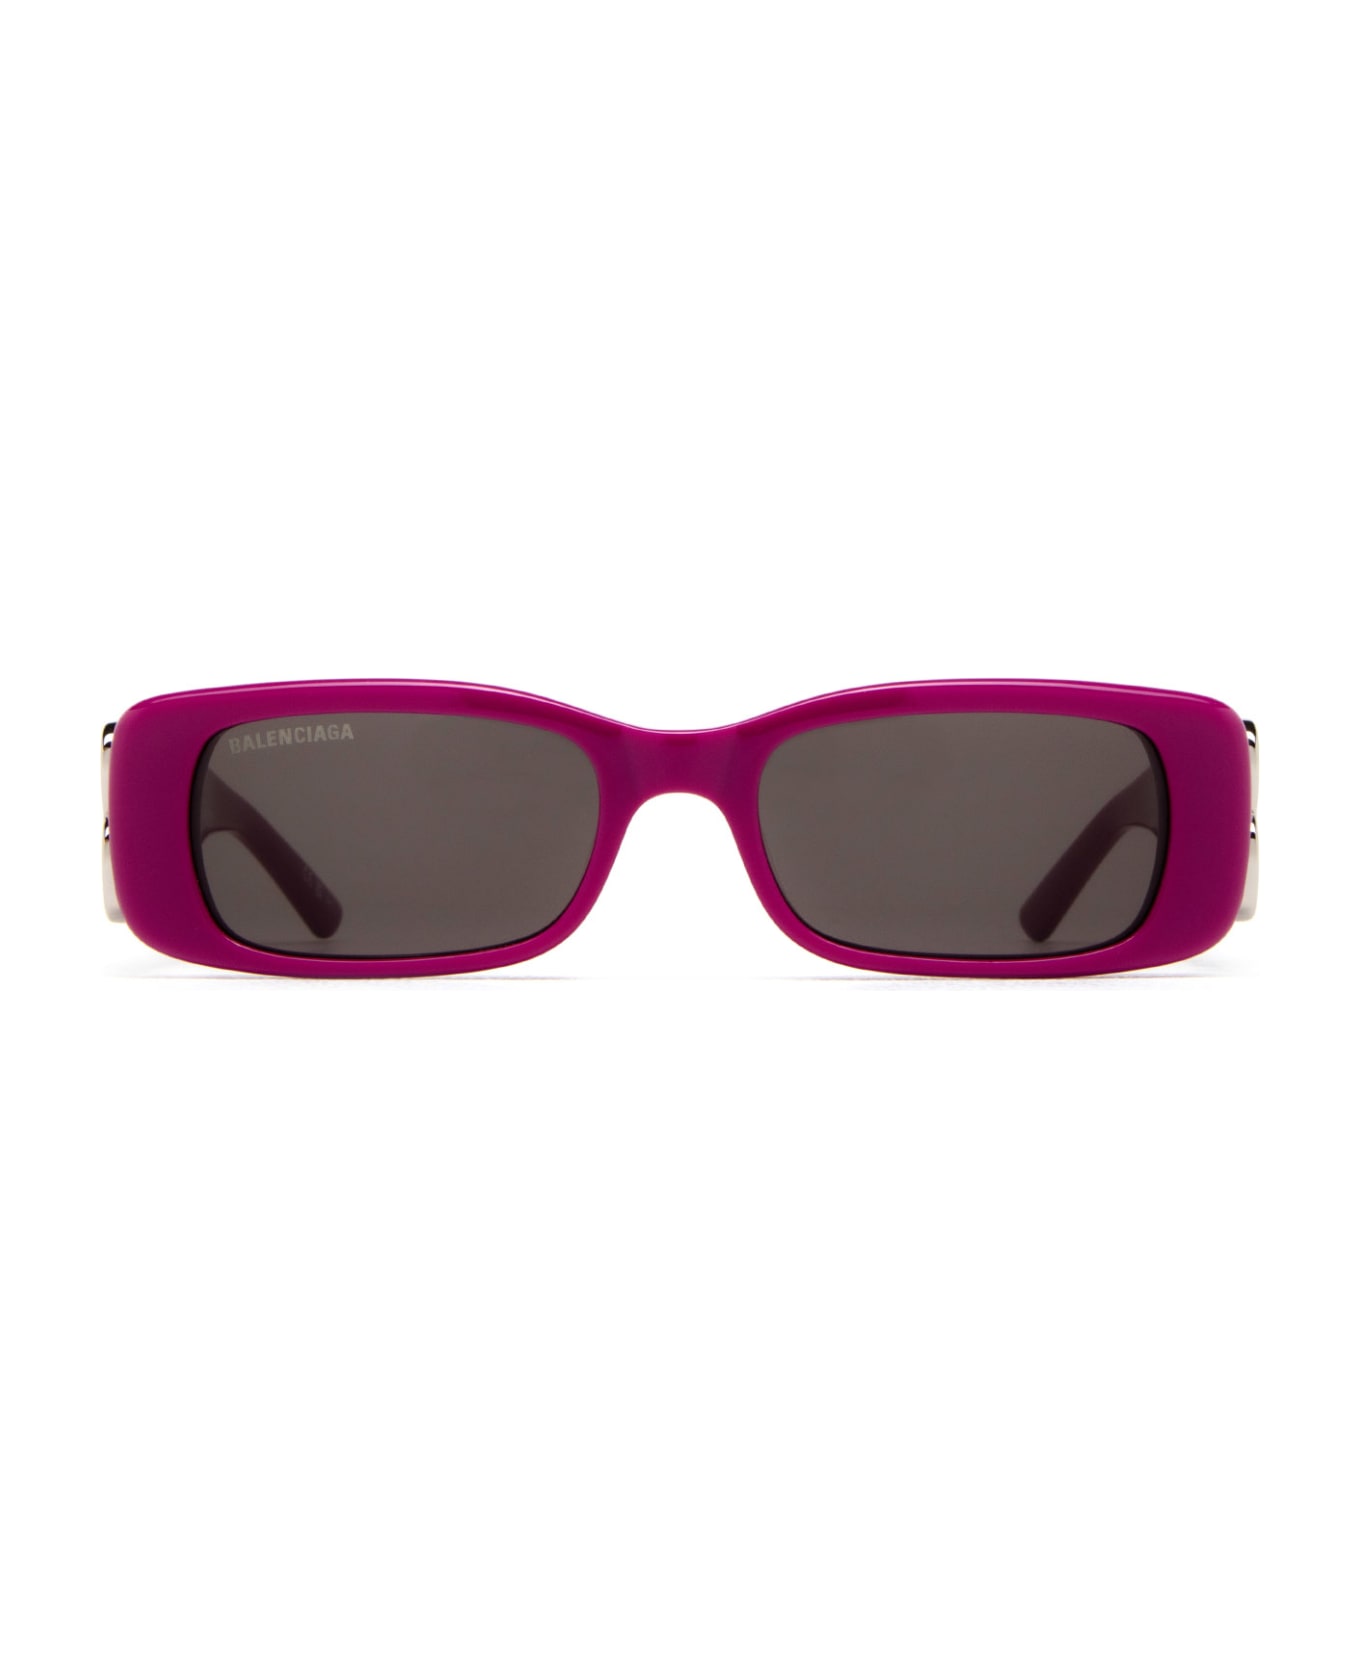 Balenciaga Eyewear Bb0096s Sunglasses - Fuchsia